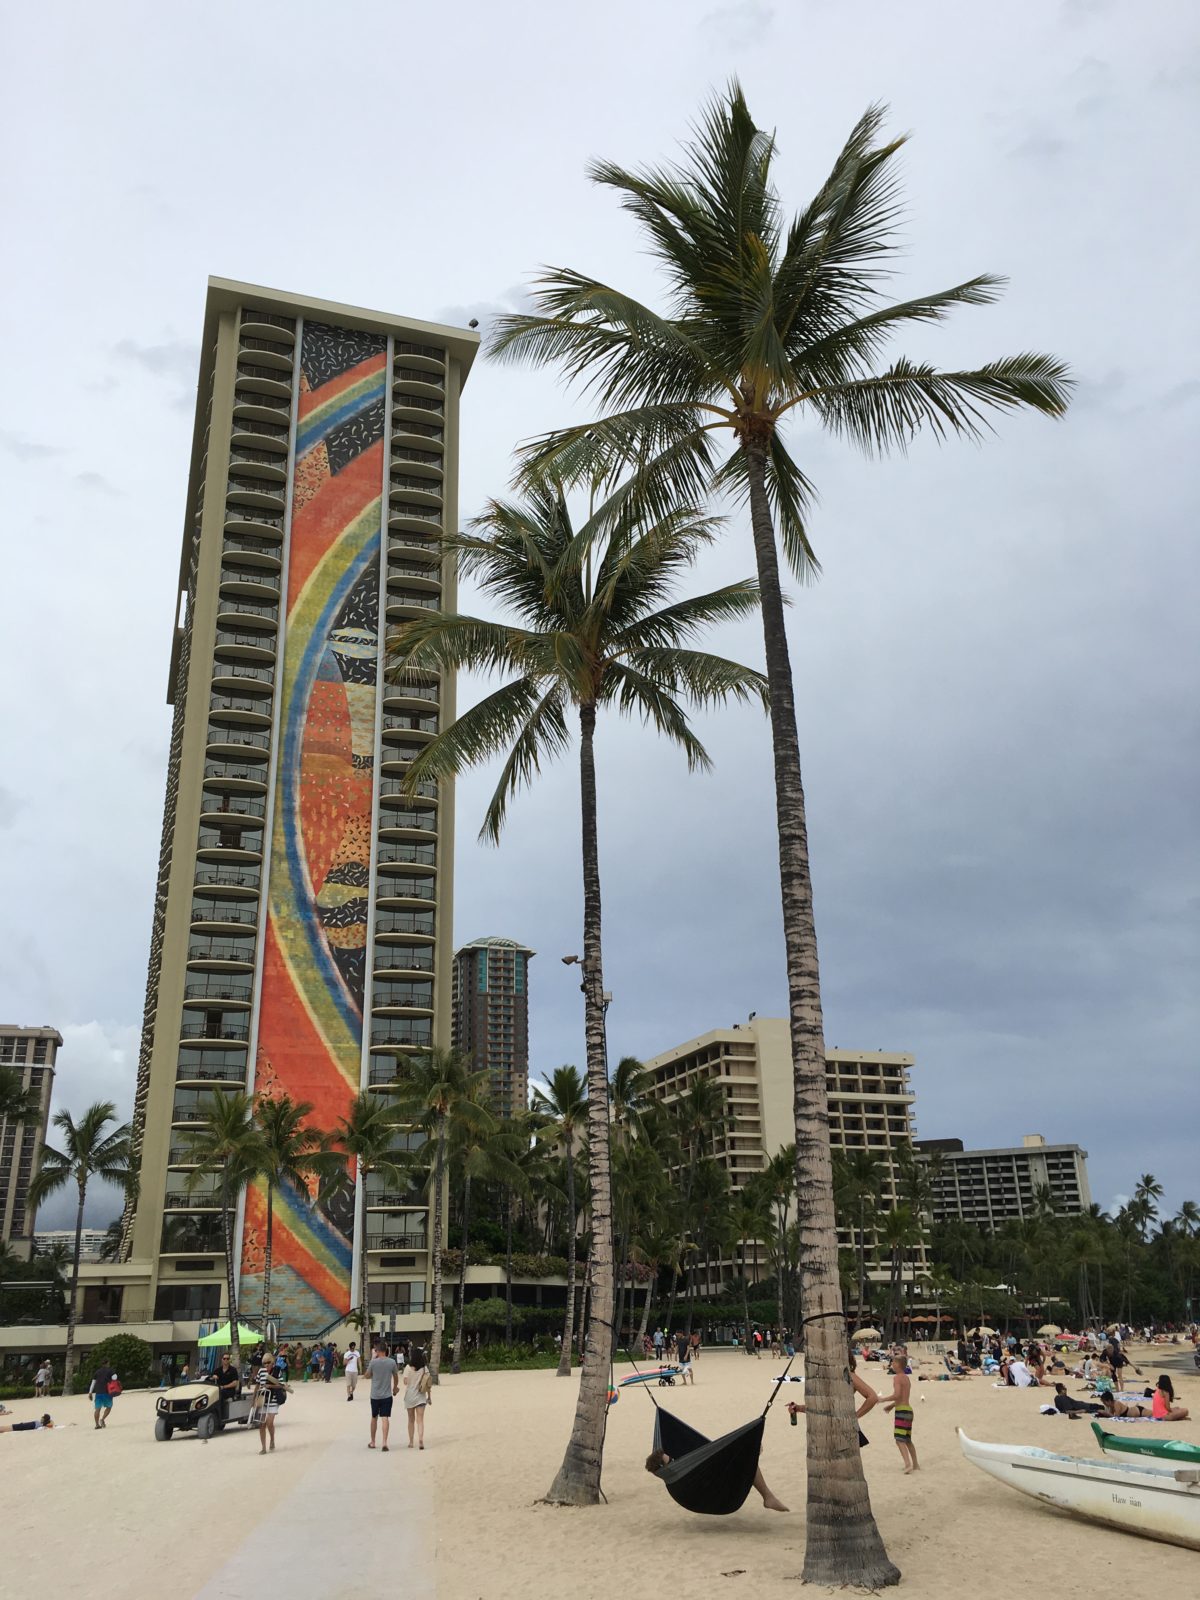 Hilton Hawaiian Village, Walkthrough, HOTEL Tour